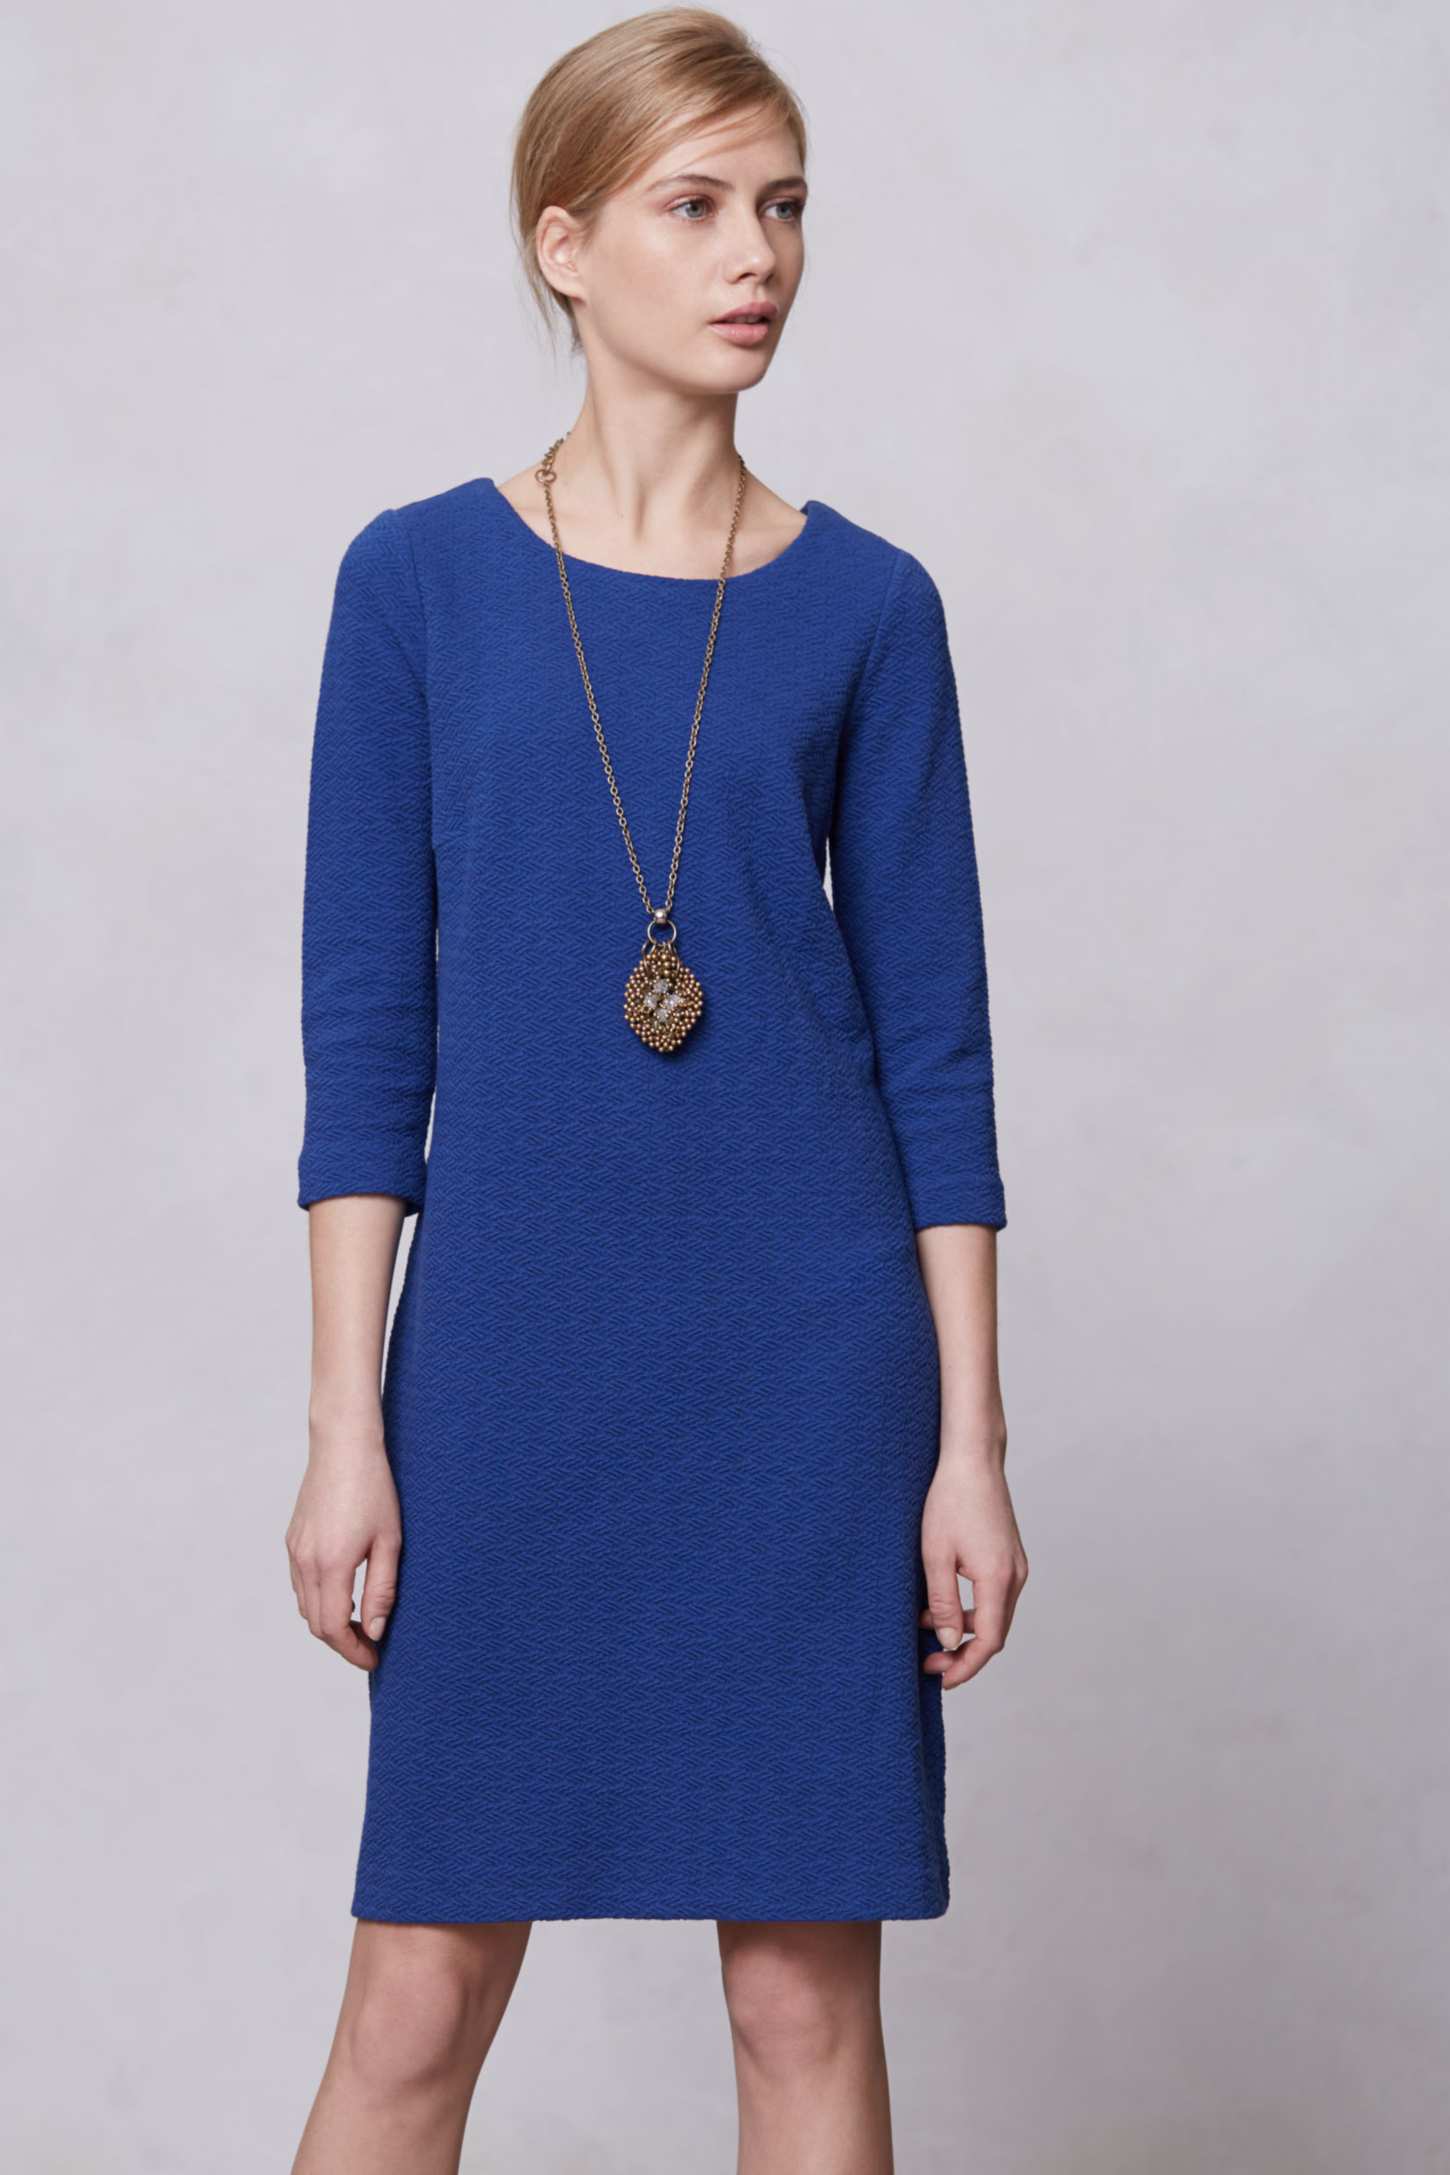 NWT $148 ANTHROPOLOGIE by GANNI LOUSA KNITTED SHIFT BLUE DRESS S | eBay